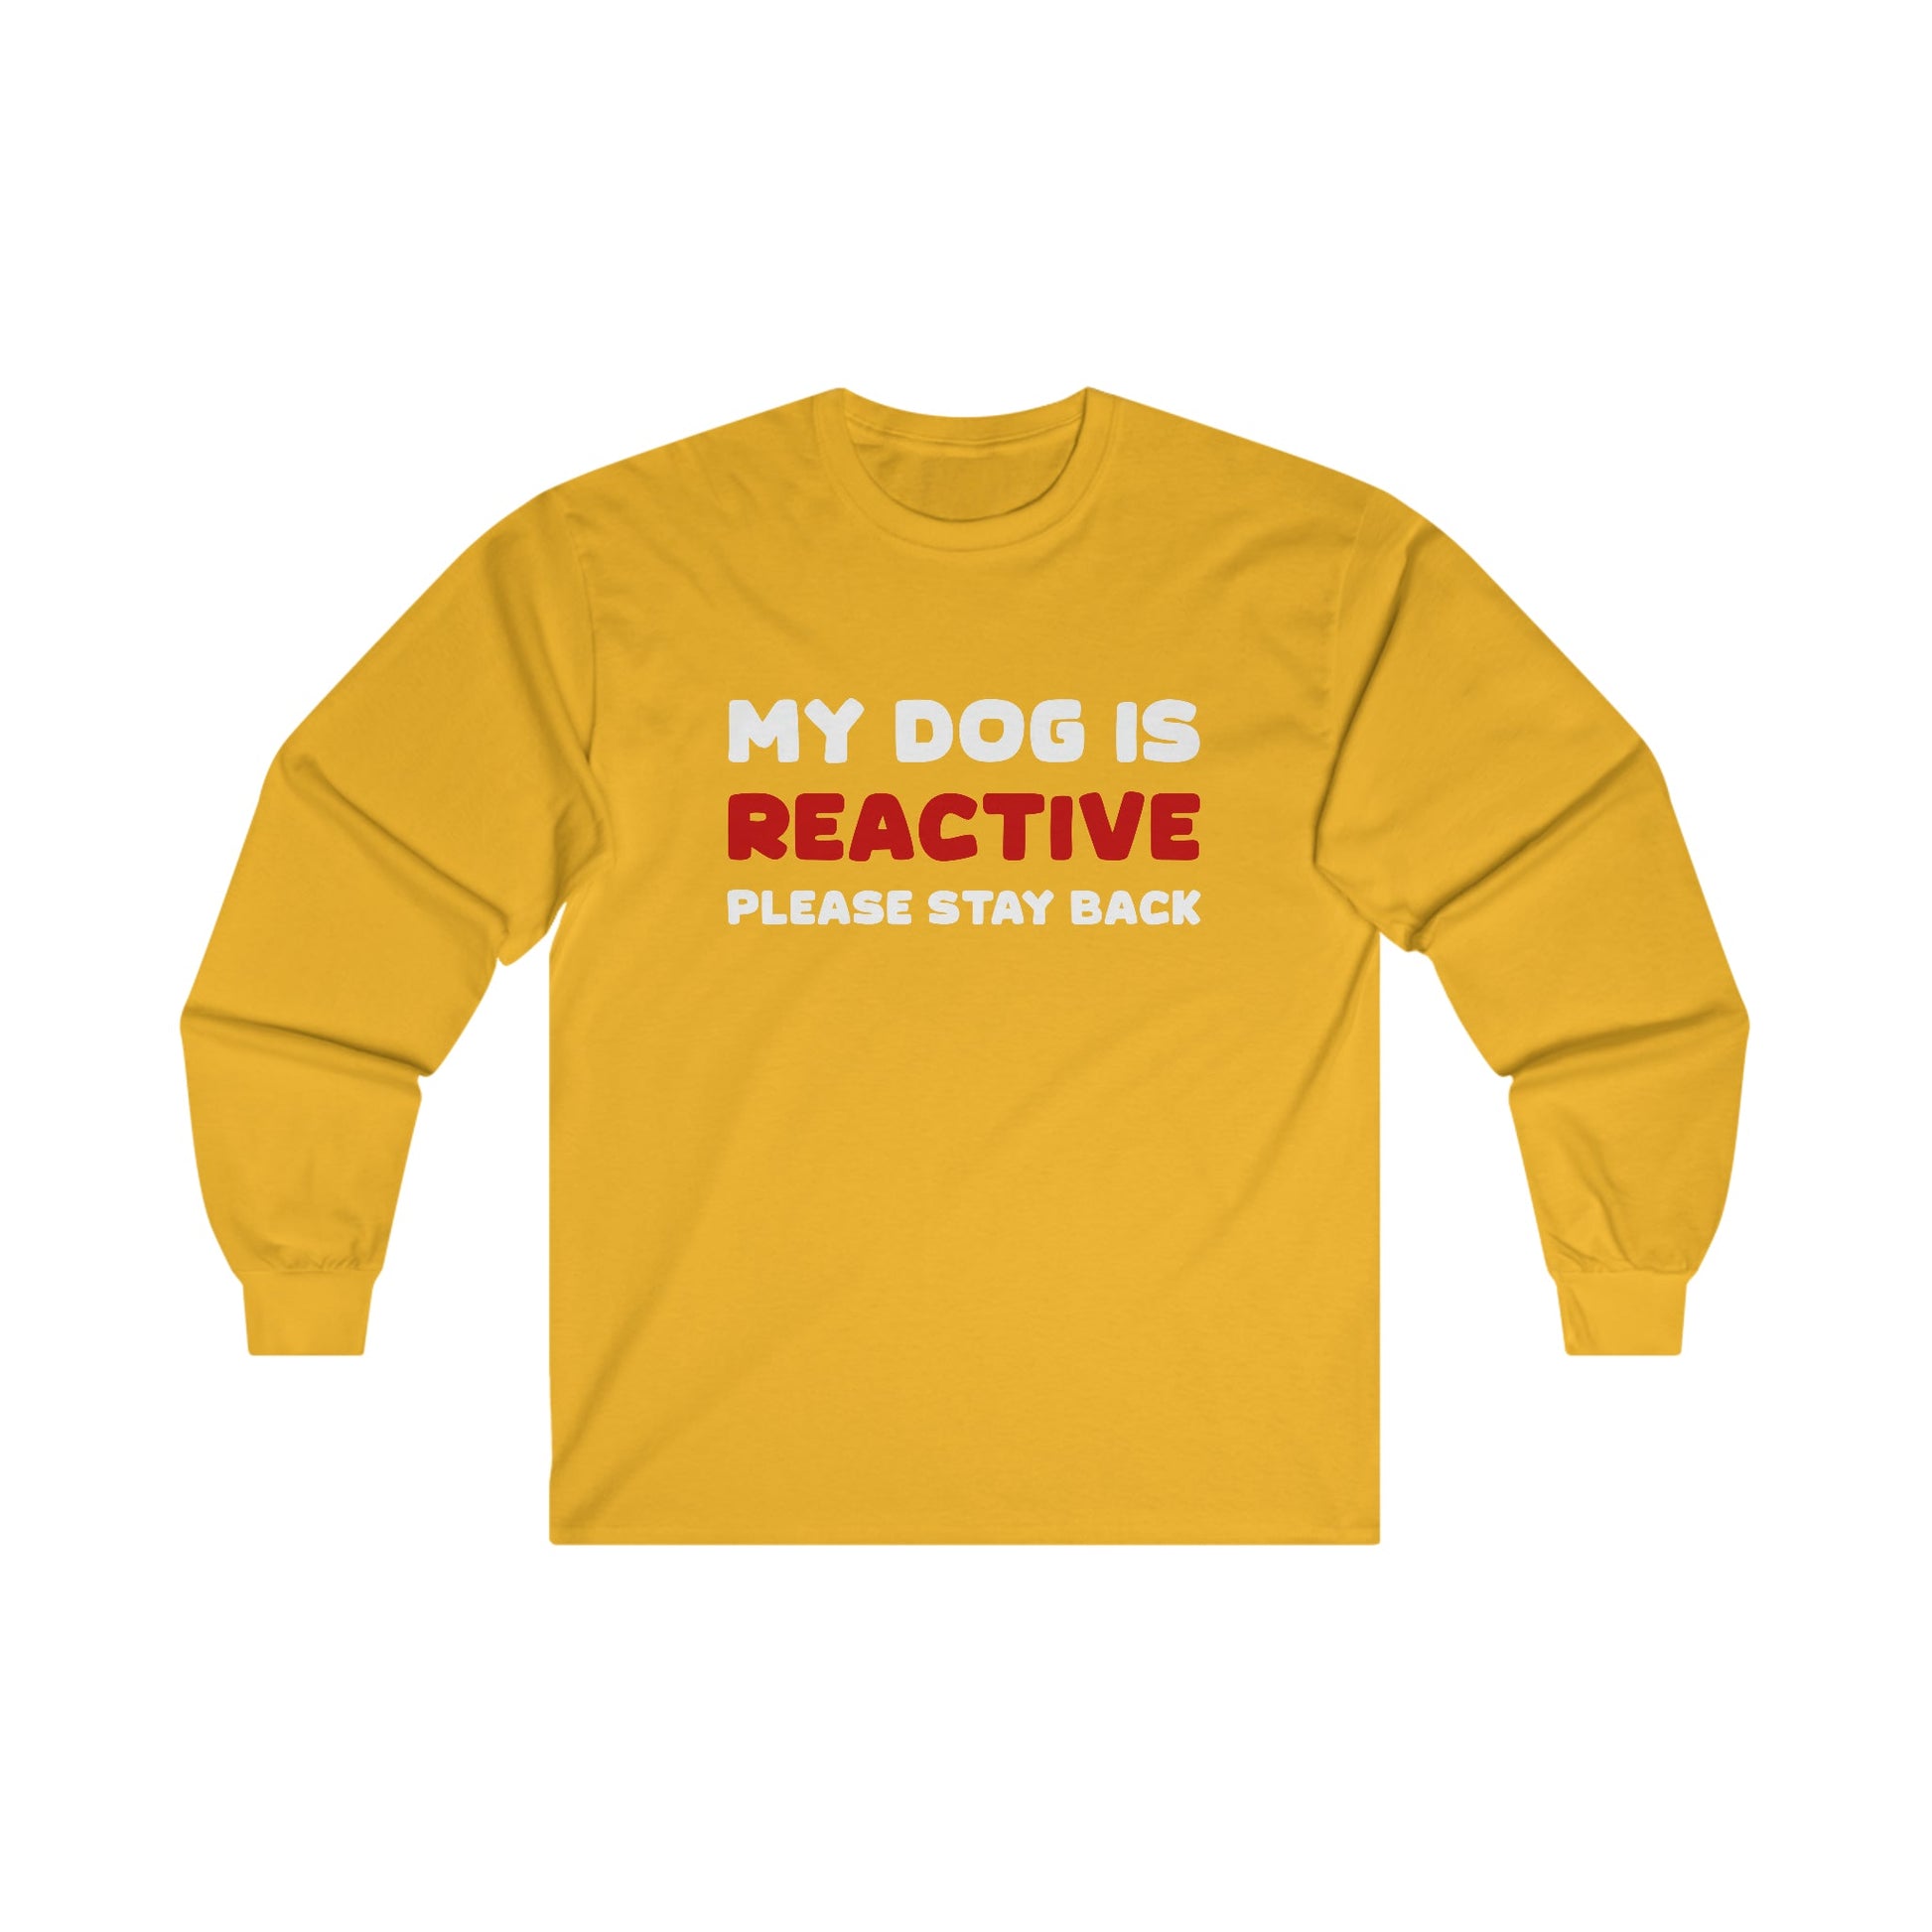 My Dog Is Reactive | 2-Sided Print | Long Sleeve Tee - Detezi Designs-23549575465519621784